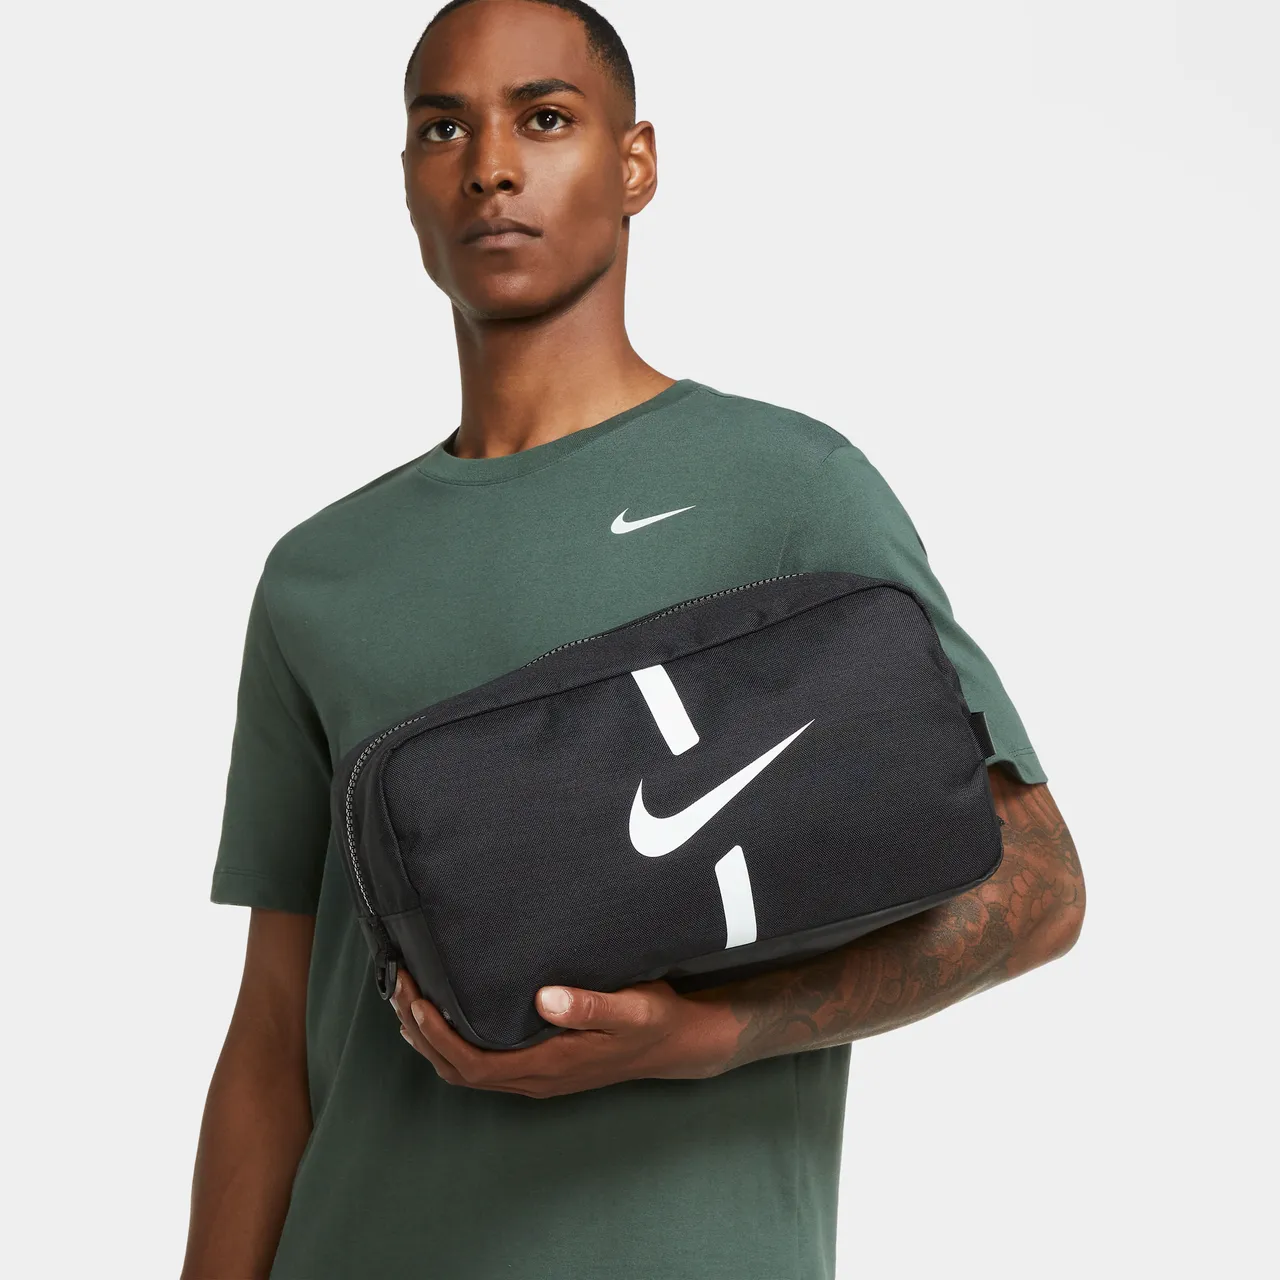 Nike Academy Football Shoe Bag - Black - Polyester